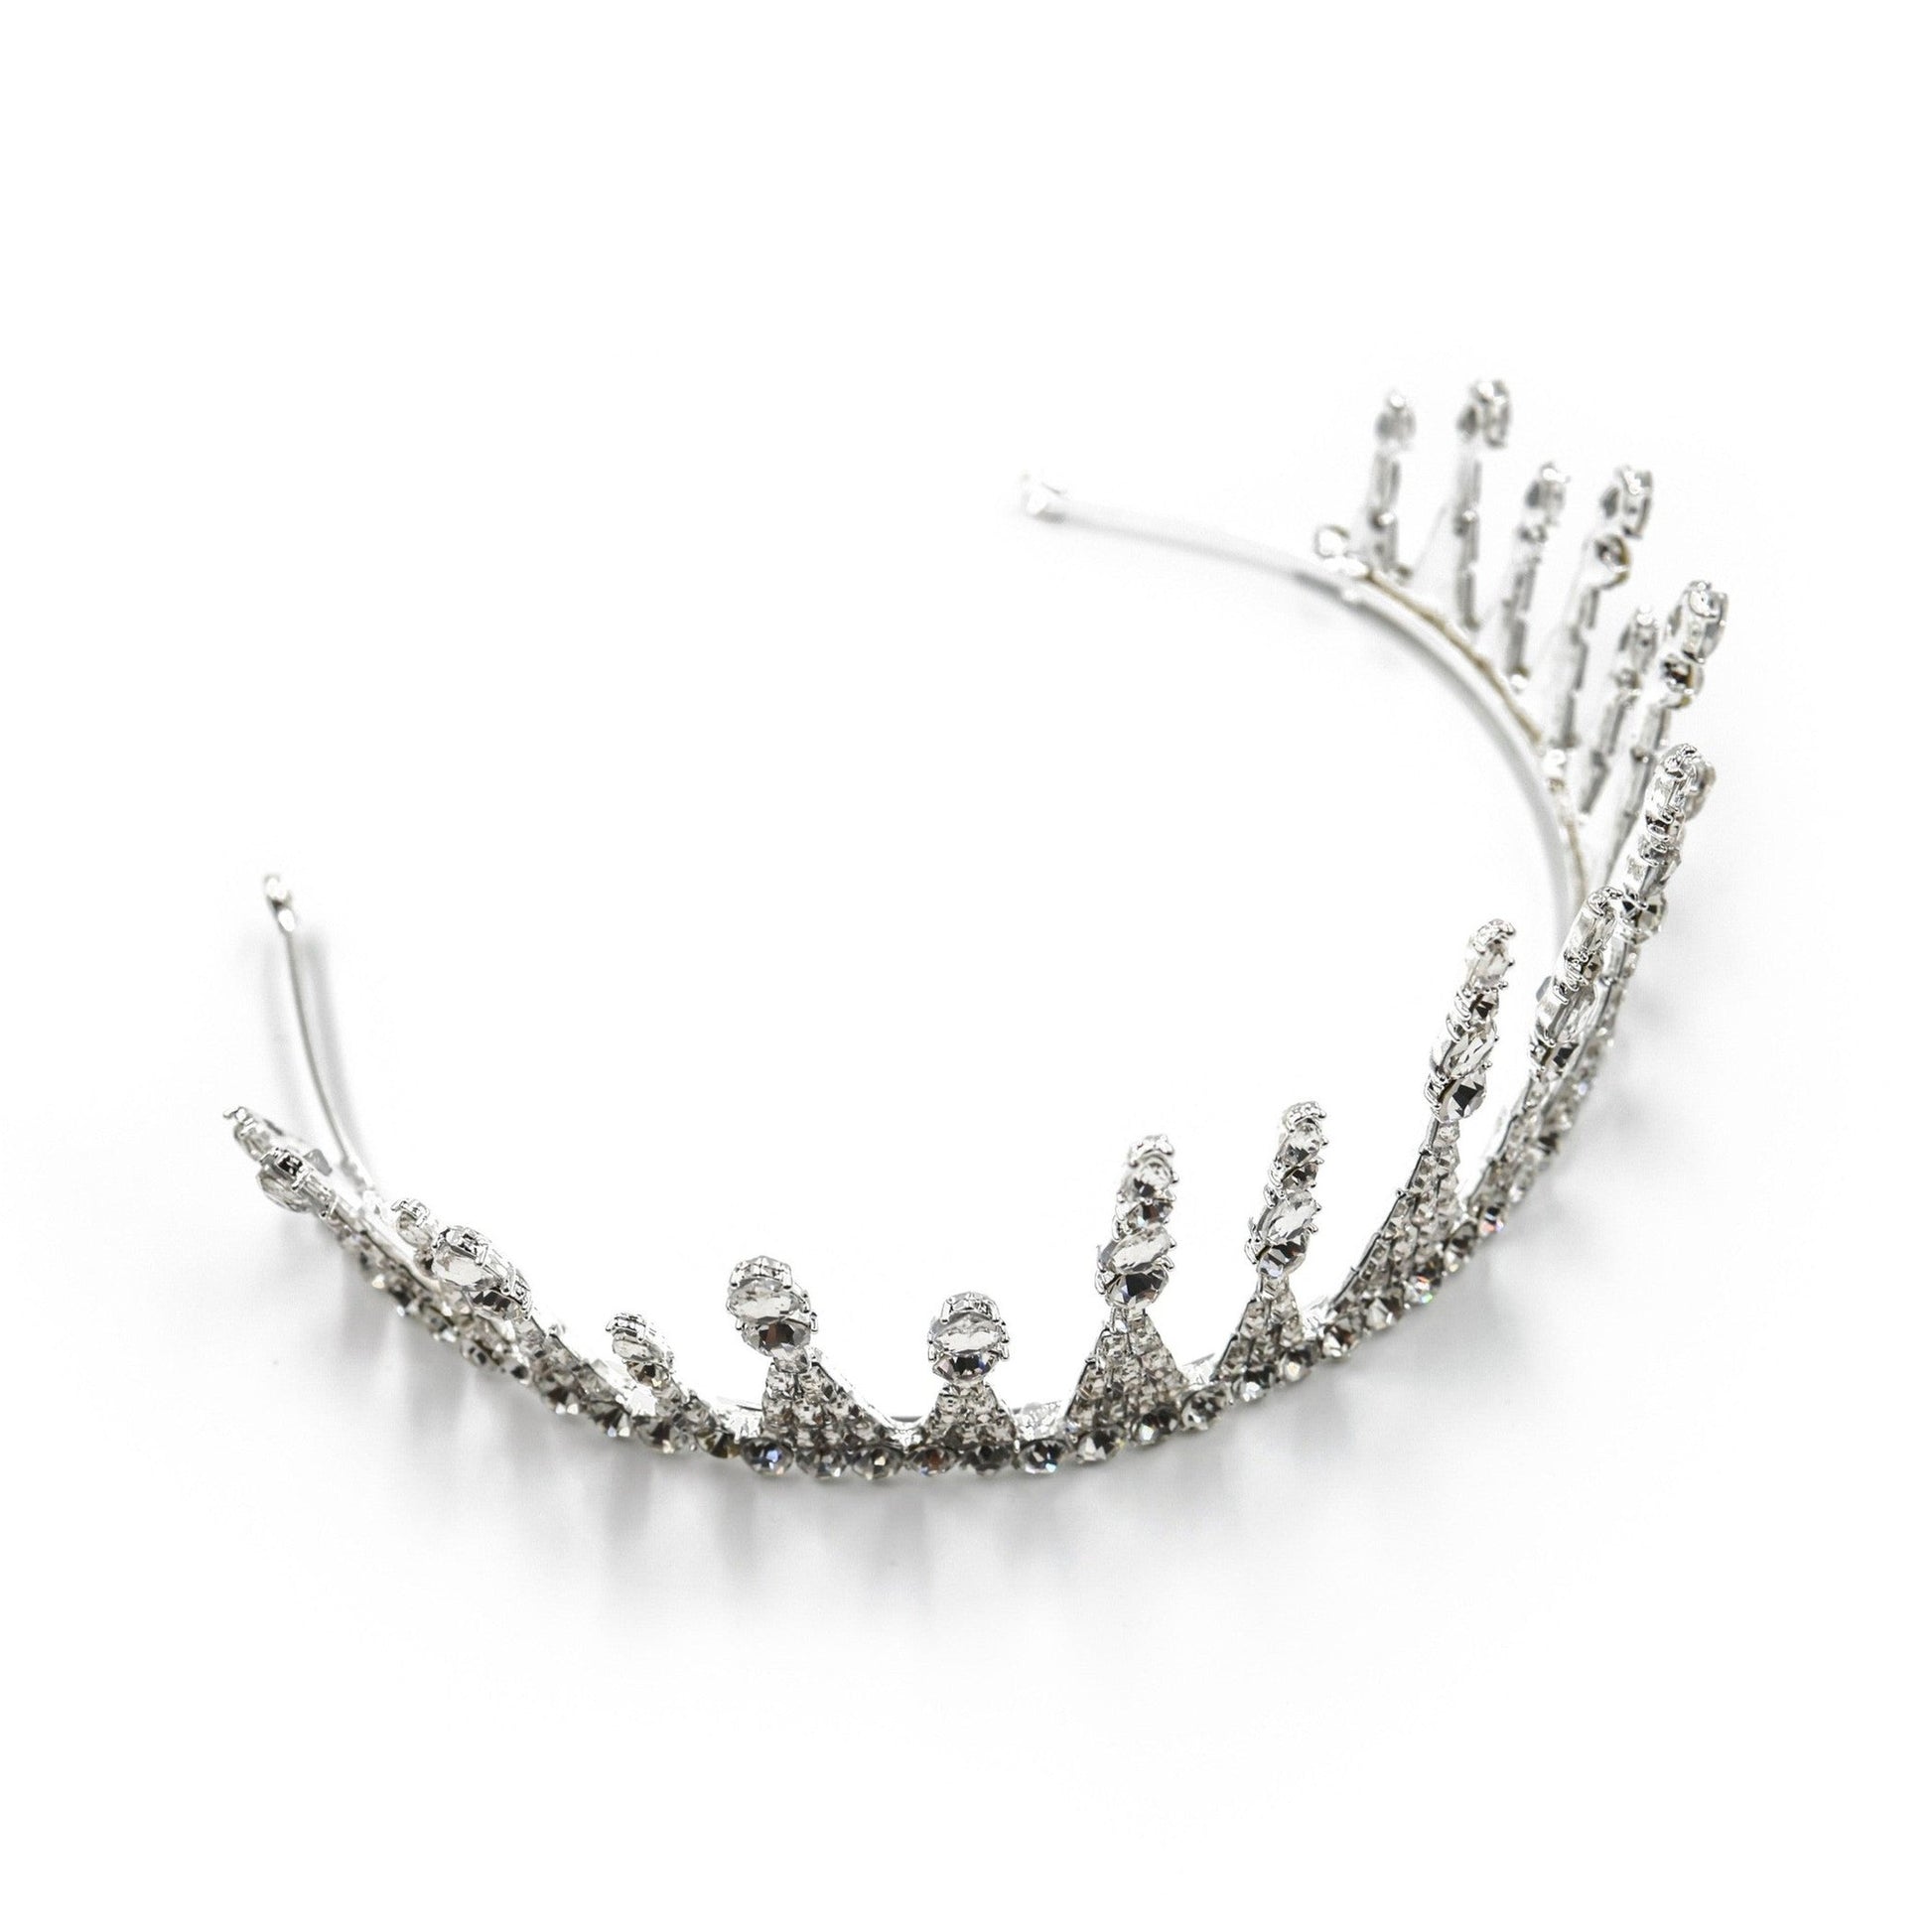 Jazz Age Skyscraper Tiara in Silver | Royalty Crown Bridal Hair Accessory